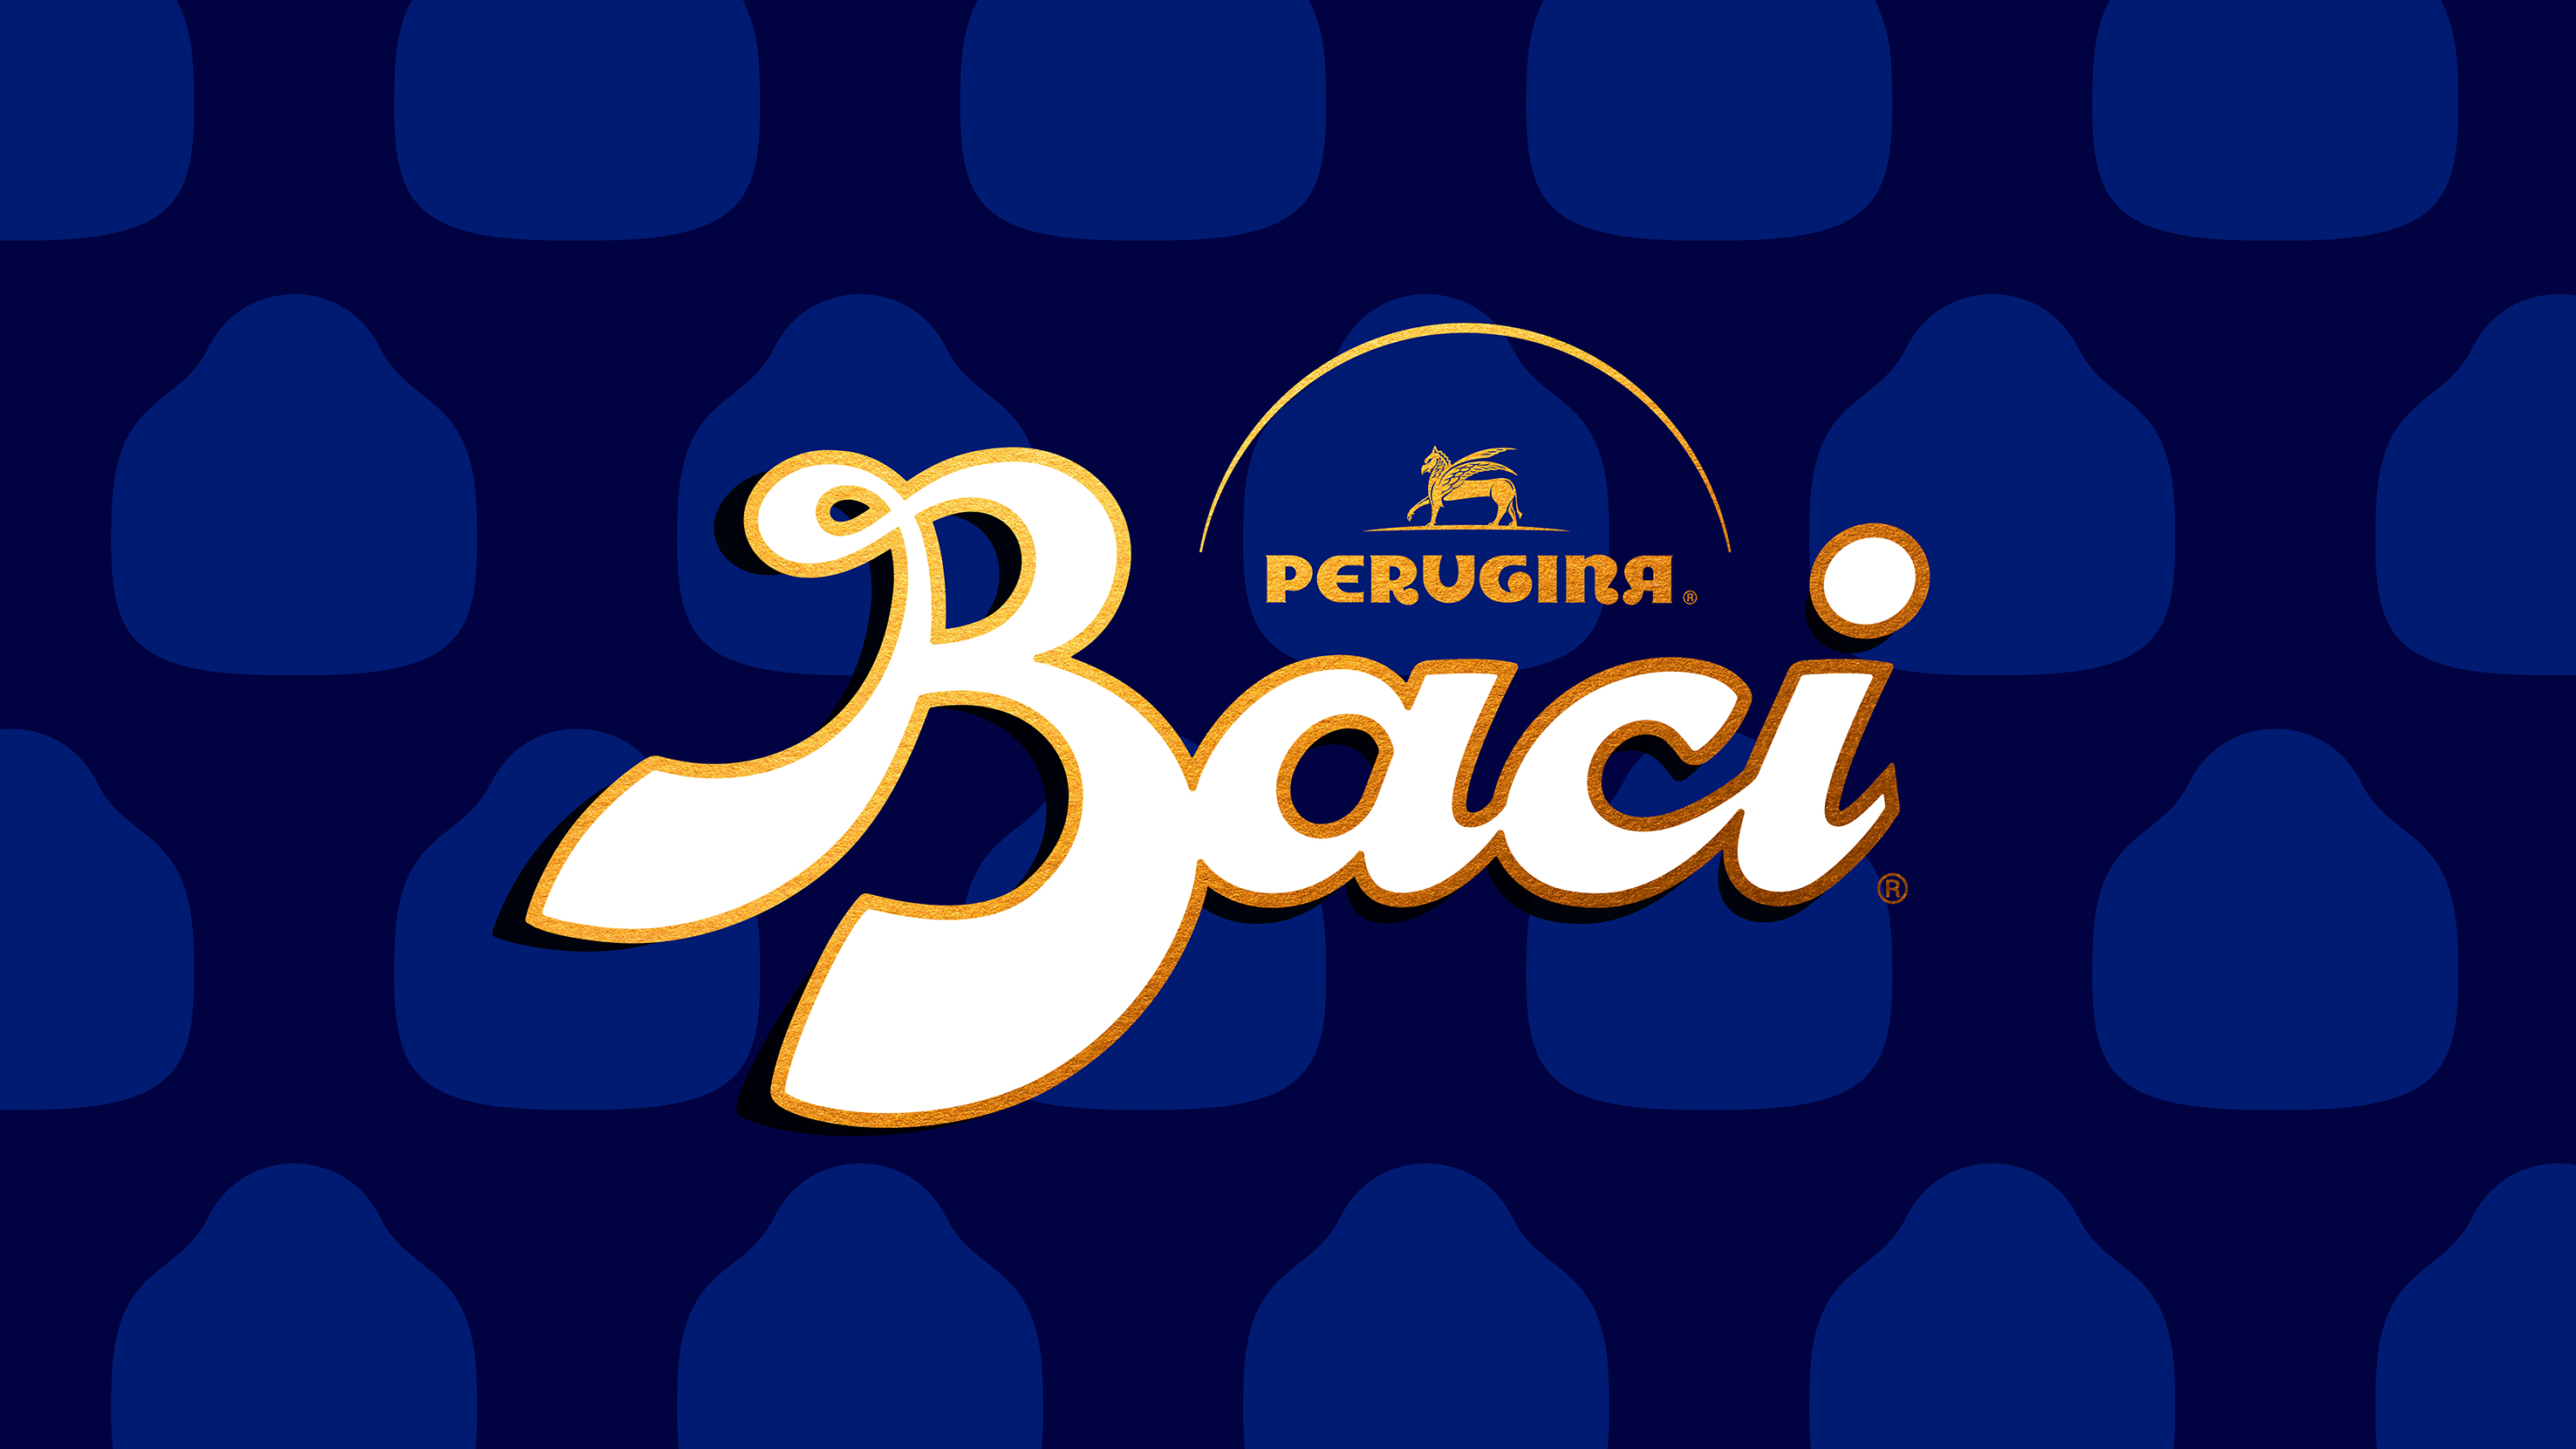 B&B studio Refreshes BACI, a True Italian Icon Much-Loved heritage Chocolate Brand